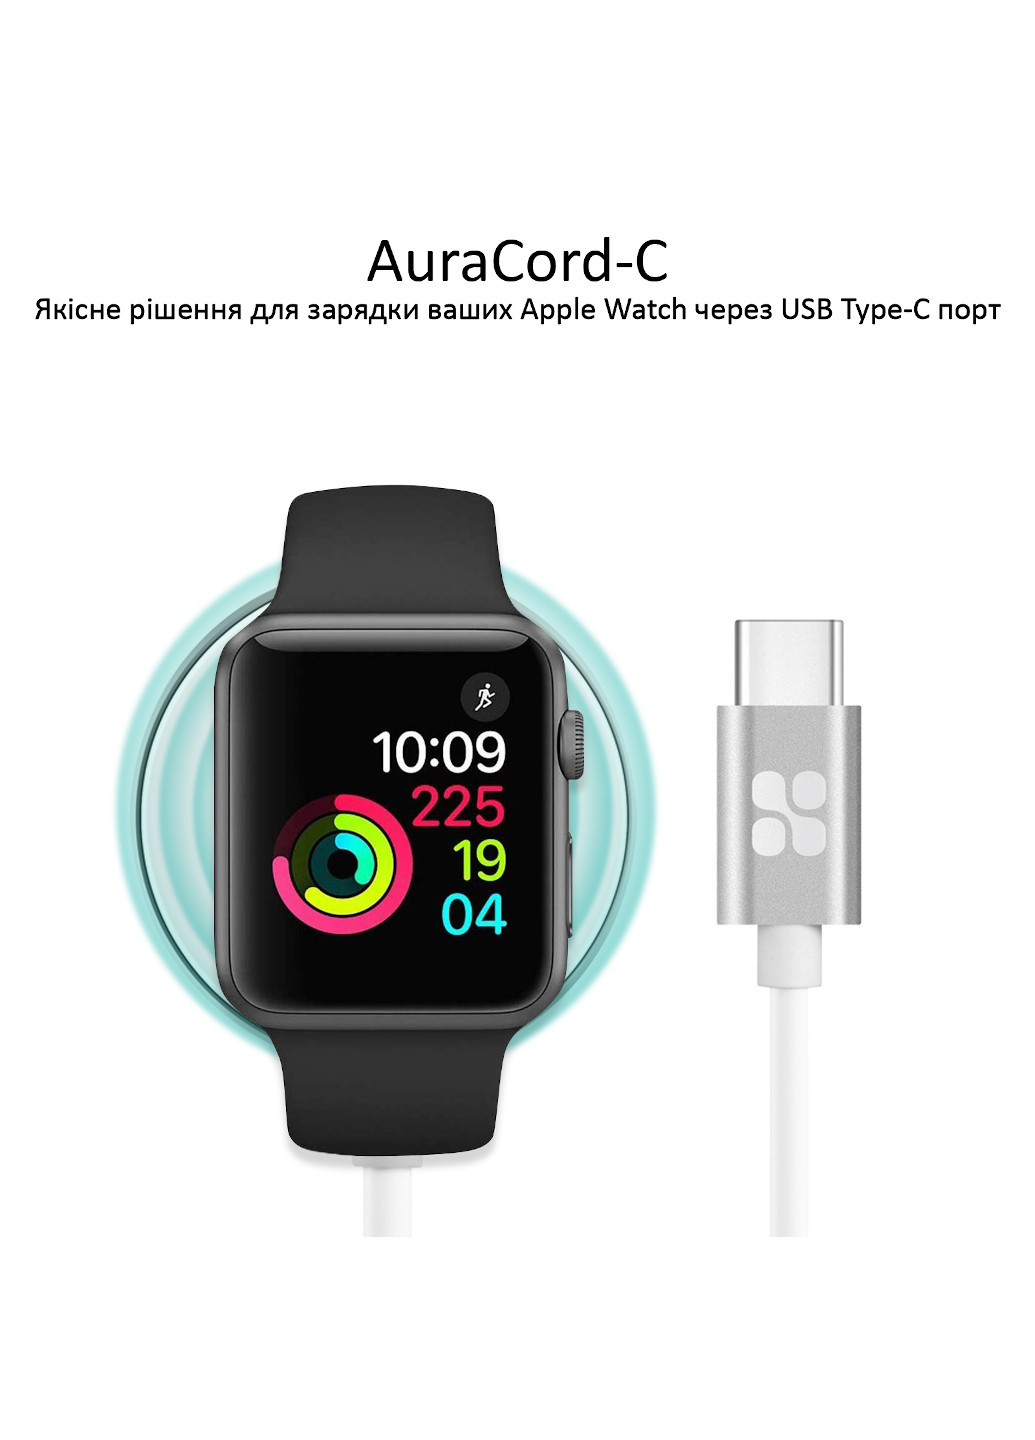 Кабель AuraCord-C USB Type-C для зарядки Apple Watch с MFI 1 м White Promate auracord-c.white (185445533)